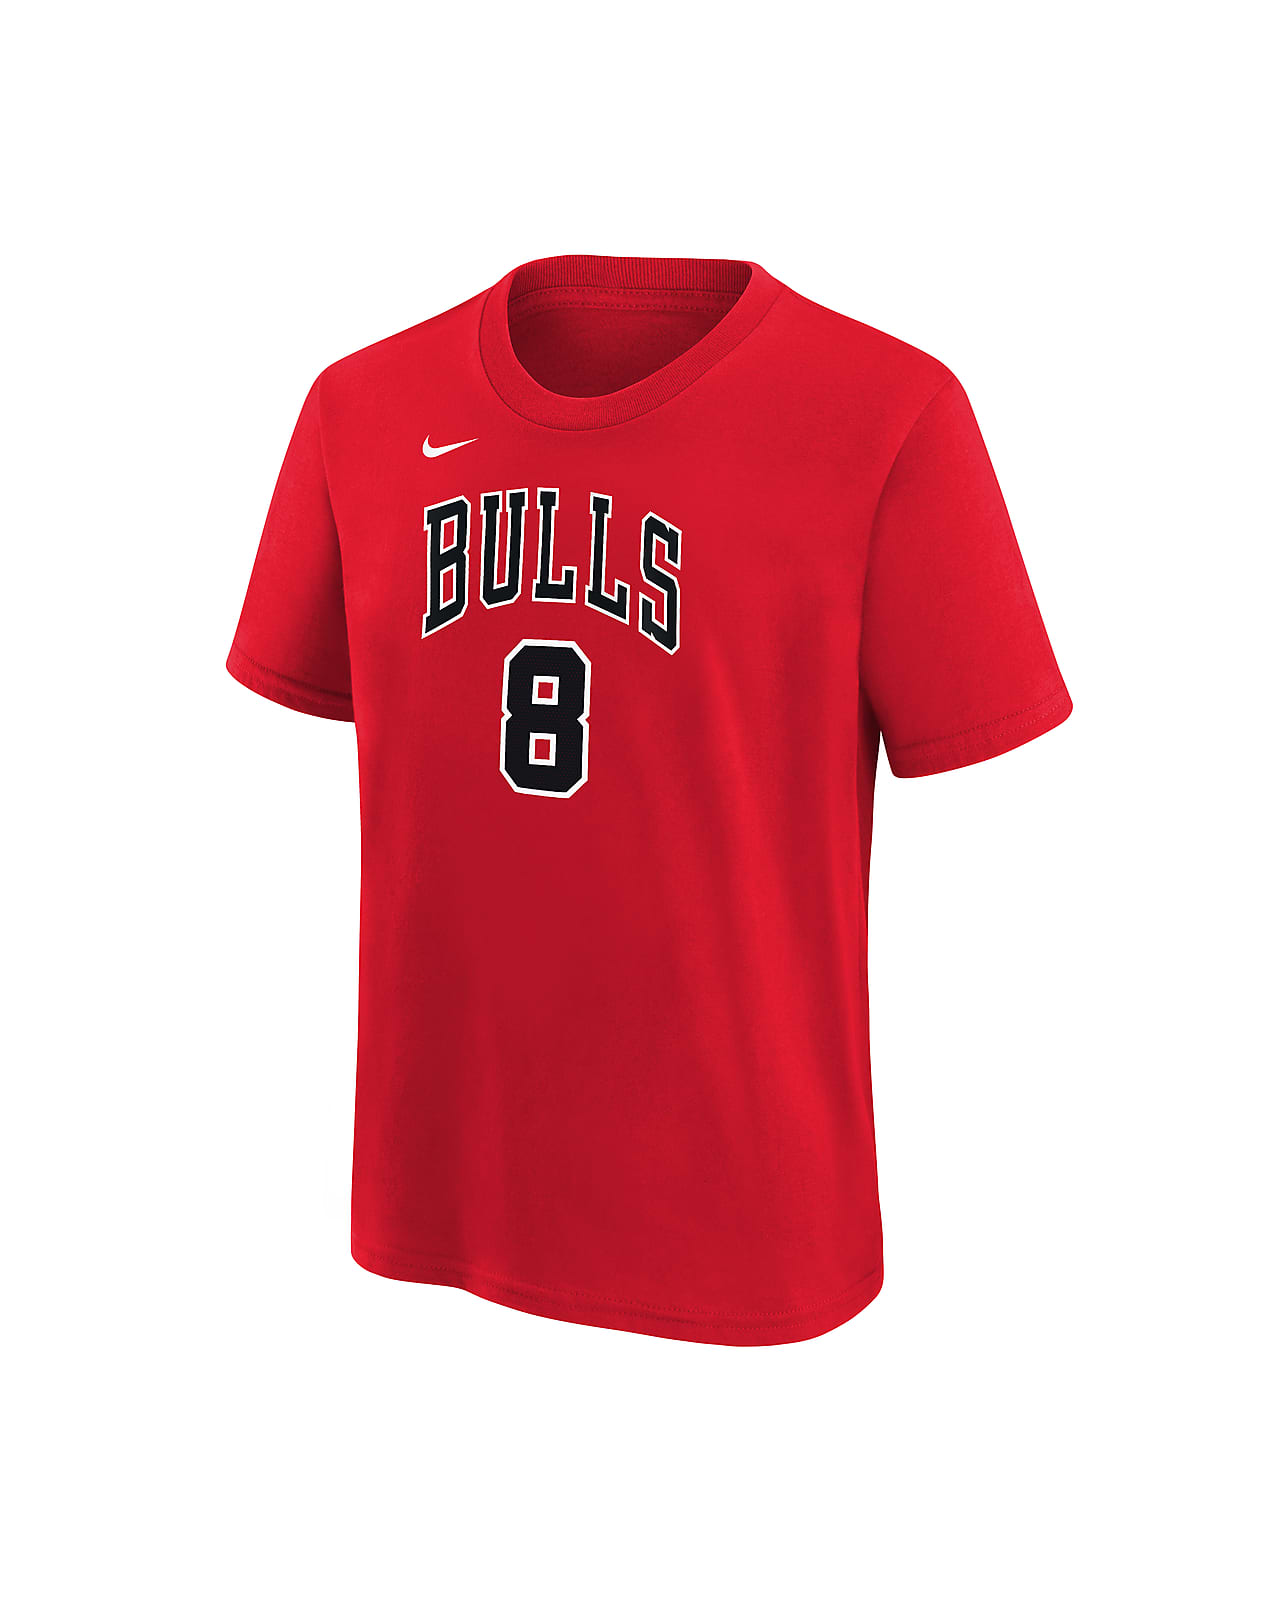 Zach LaVine Chicago Bulls Big Kids' (Boys') Nike NBA T-Shirt